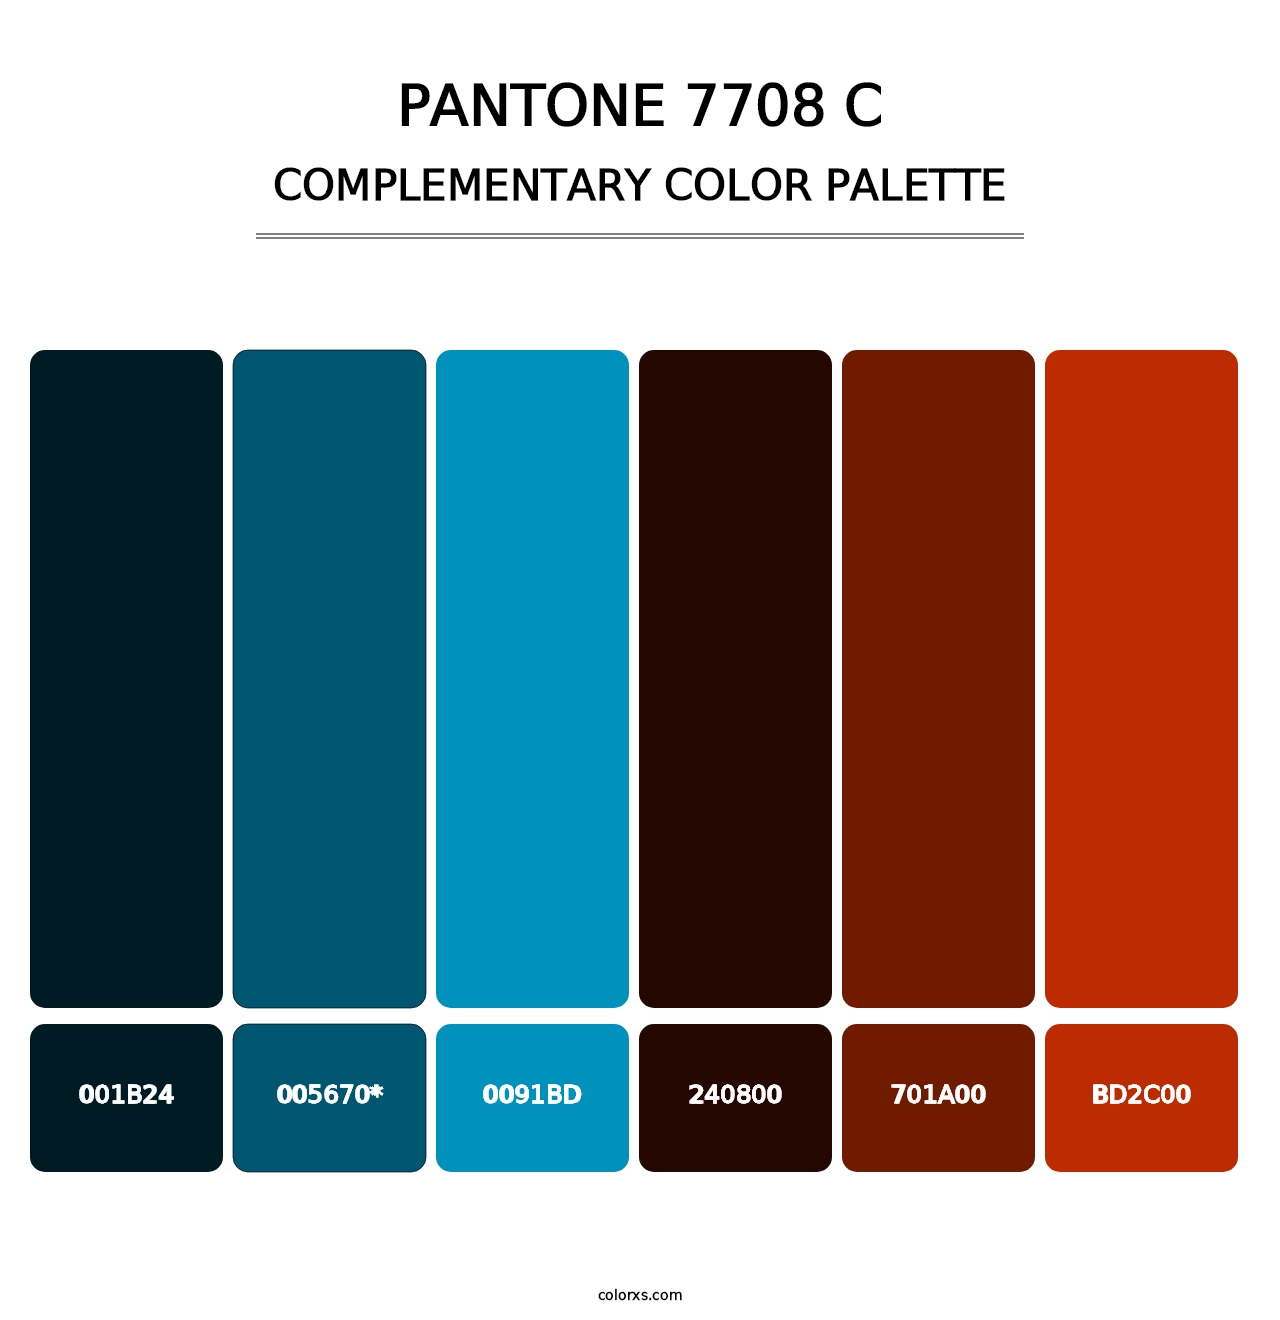 PANTONE 7708 C - Complementary Color Palette